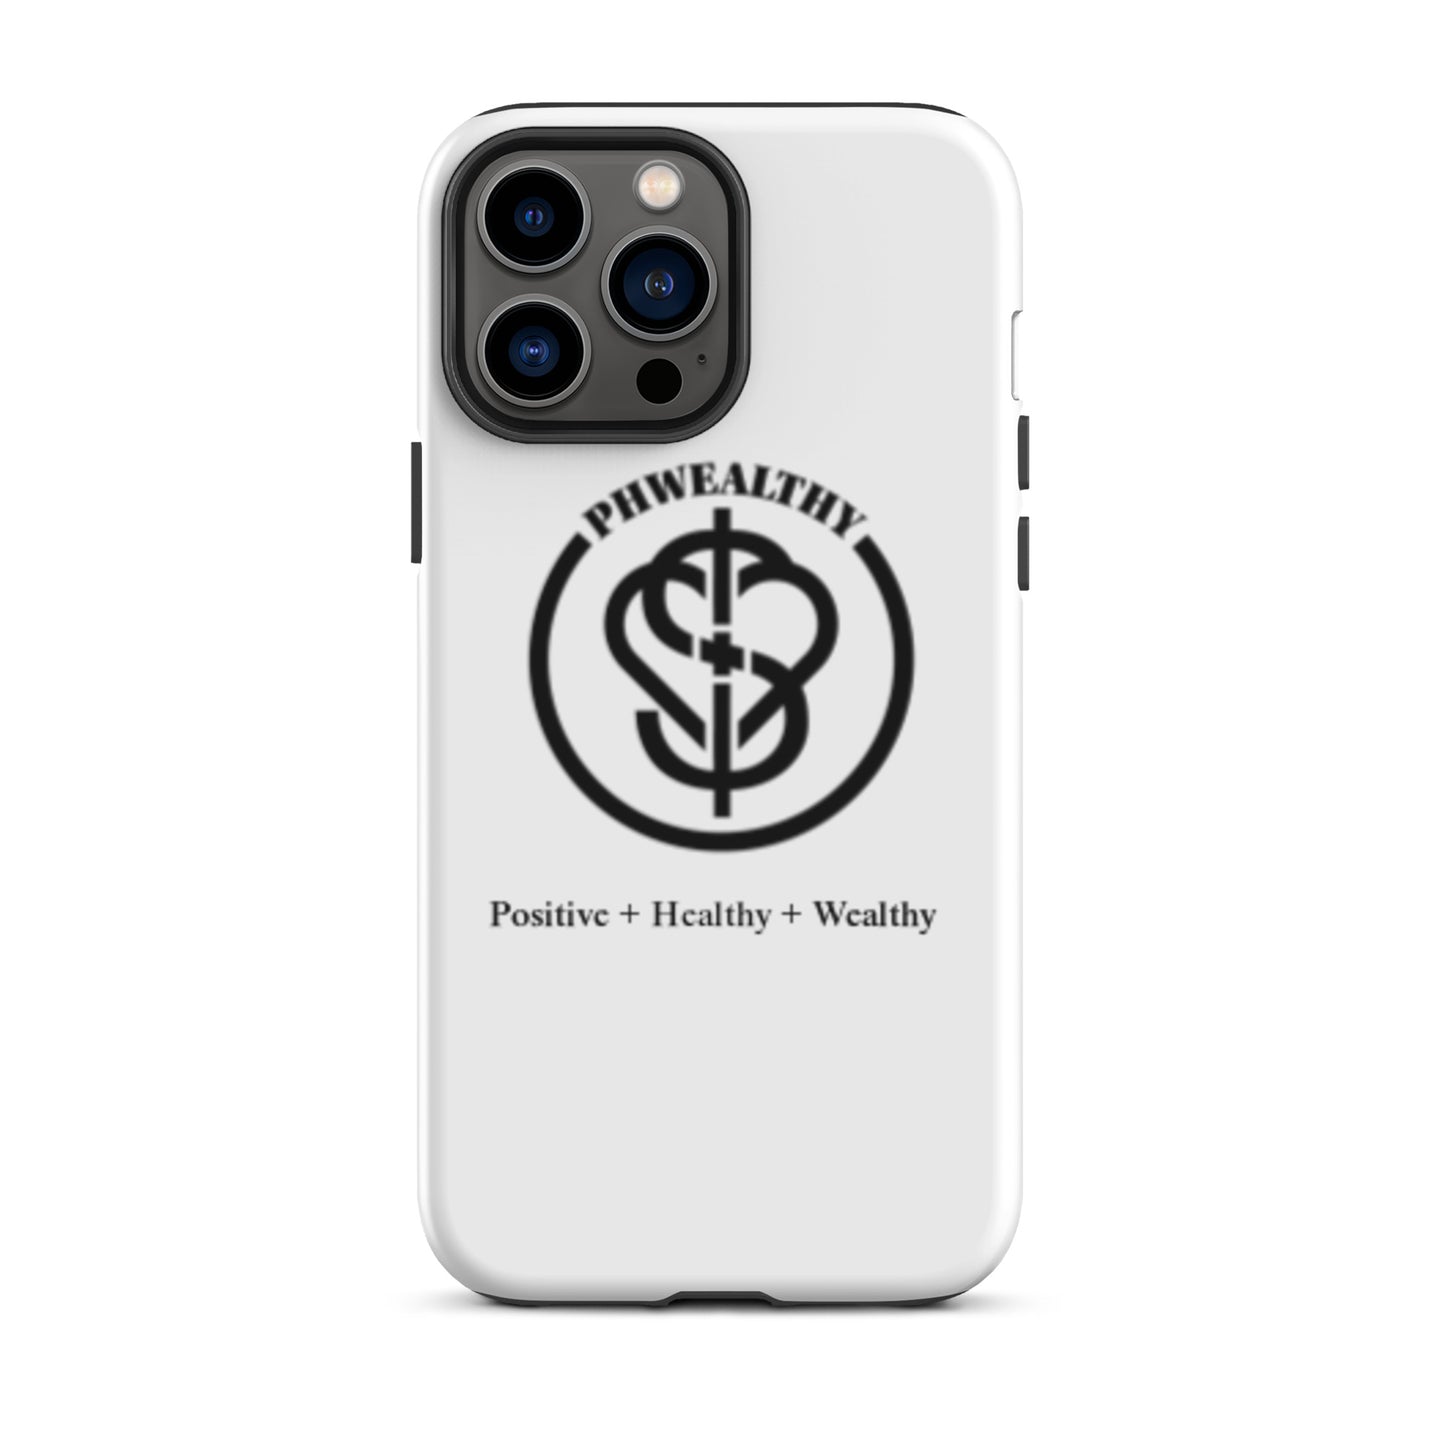 Phwealthy OG Tough iPhone case